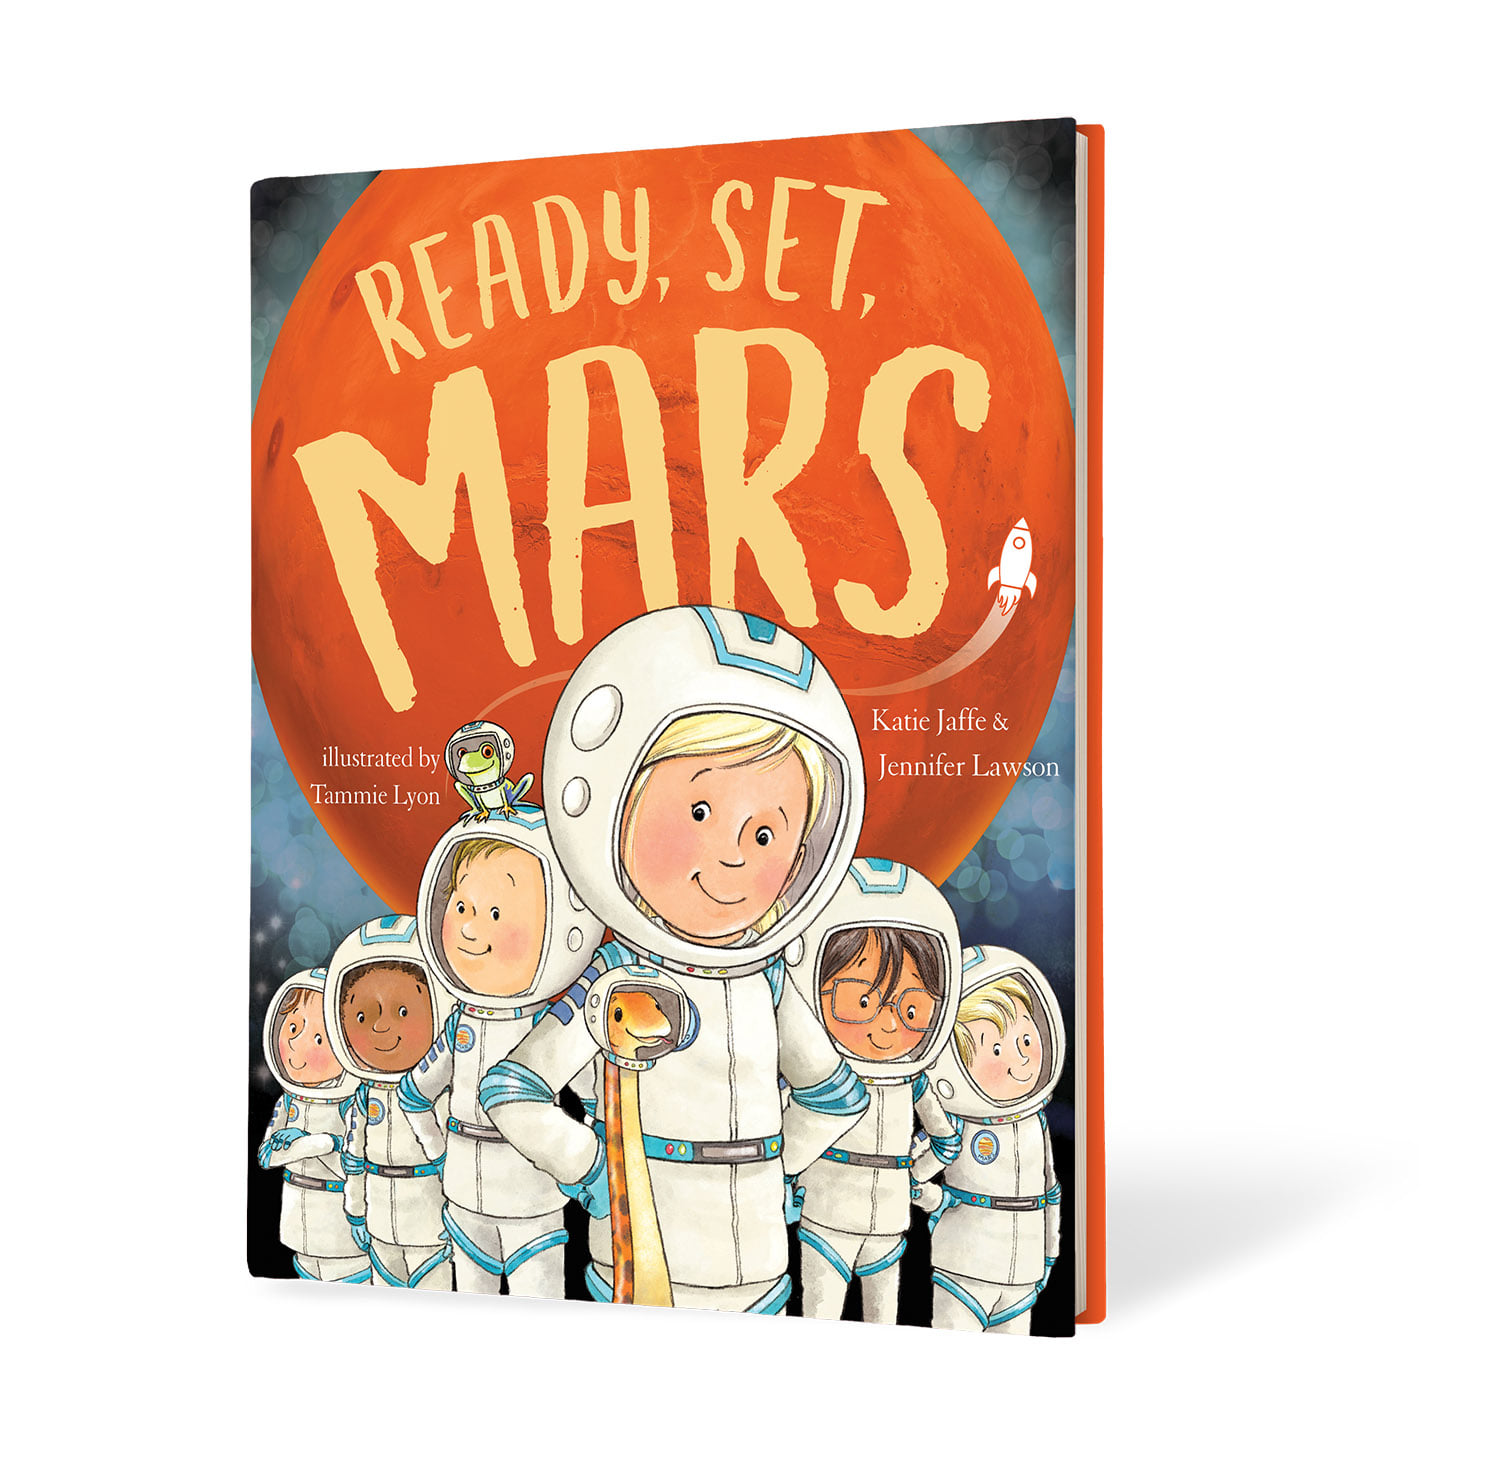 New book, Ready, Set, Mars!